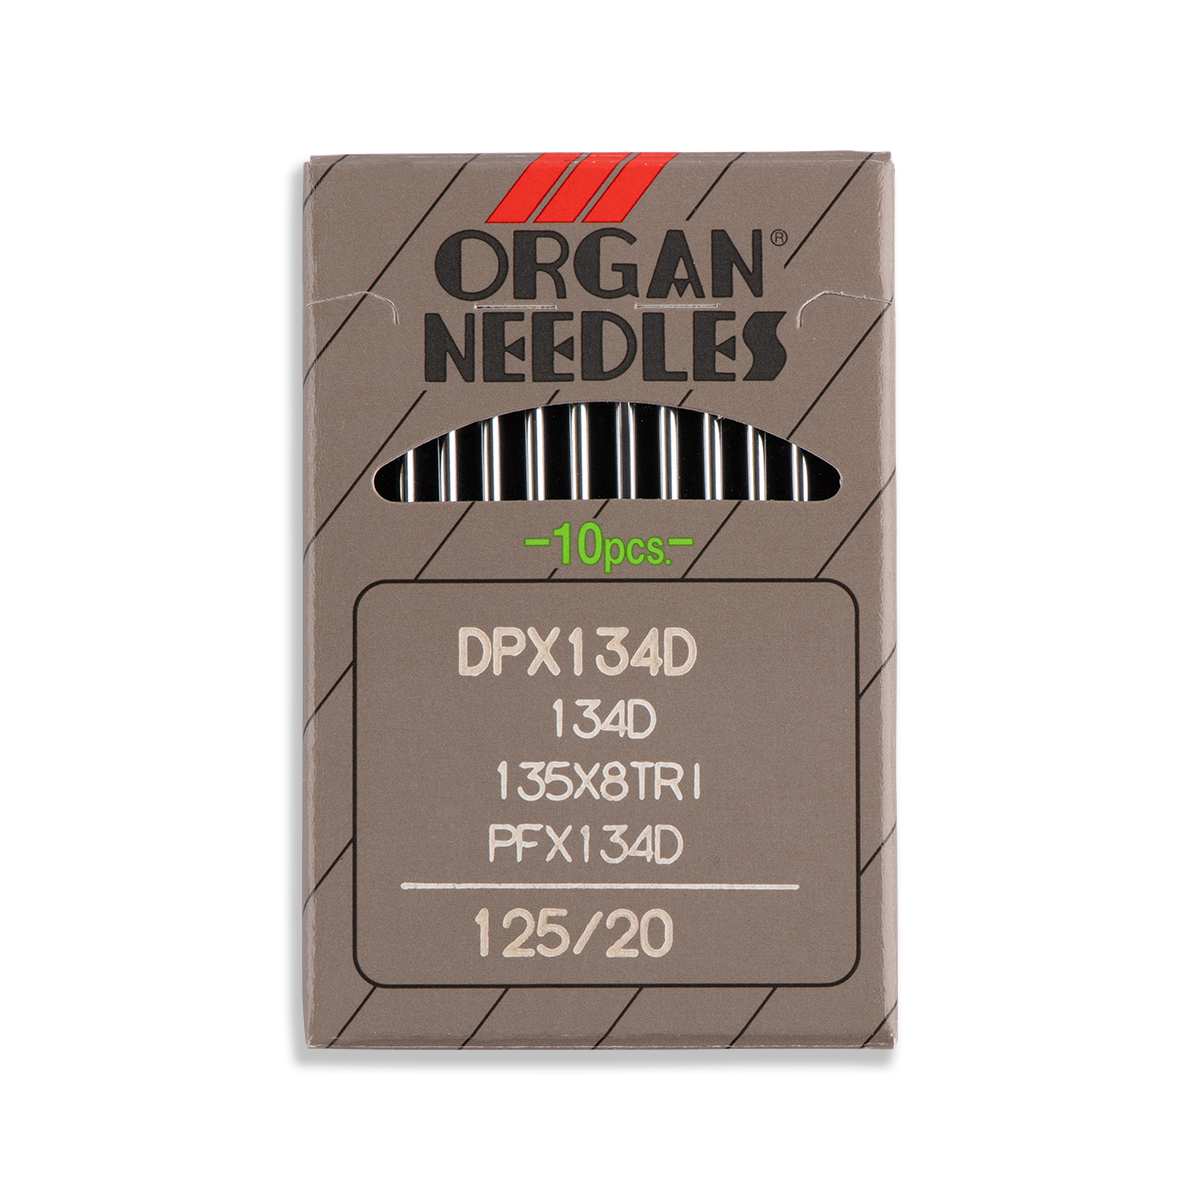 Organ Leather Machine Needles - DPX134D, 134, 135x8TRI, PFx134D - 10/Pack -  WAWAK Sewing Supplies